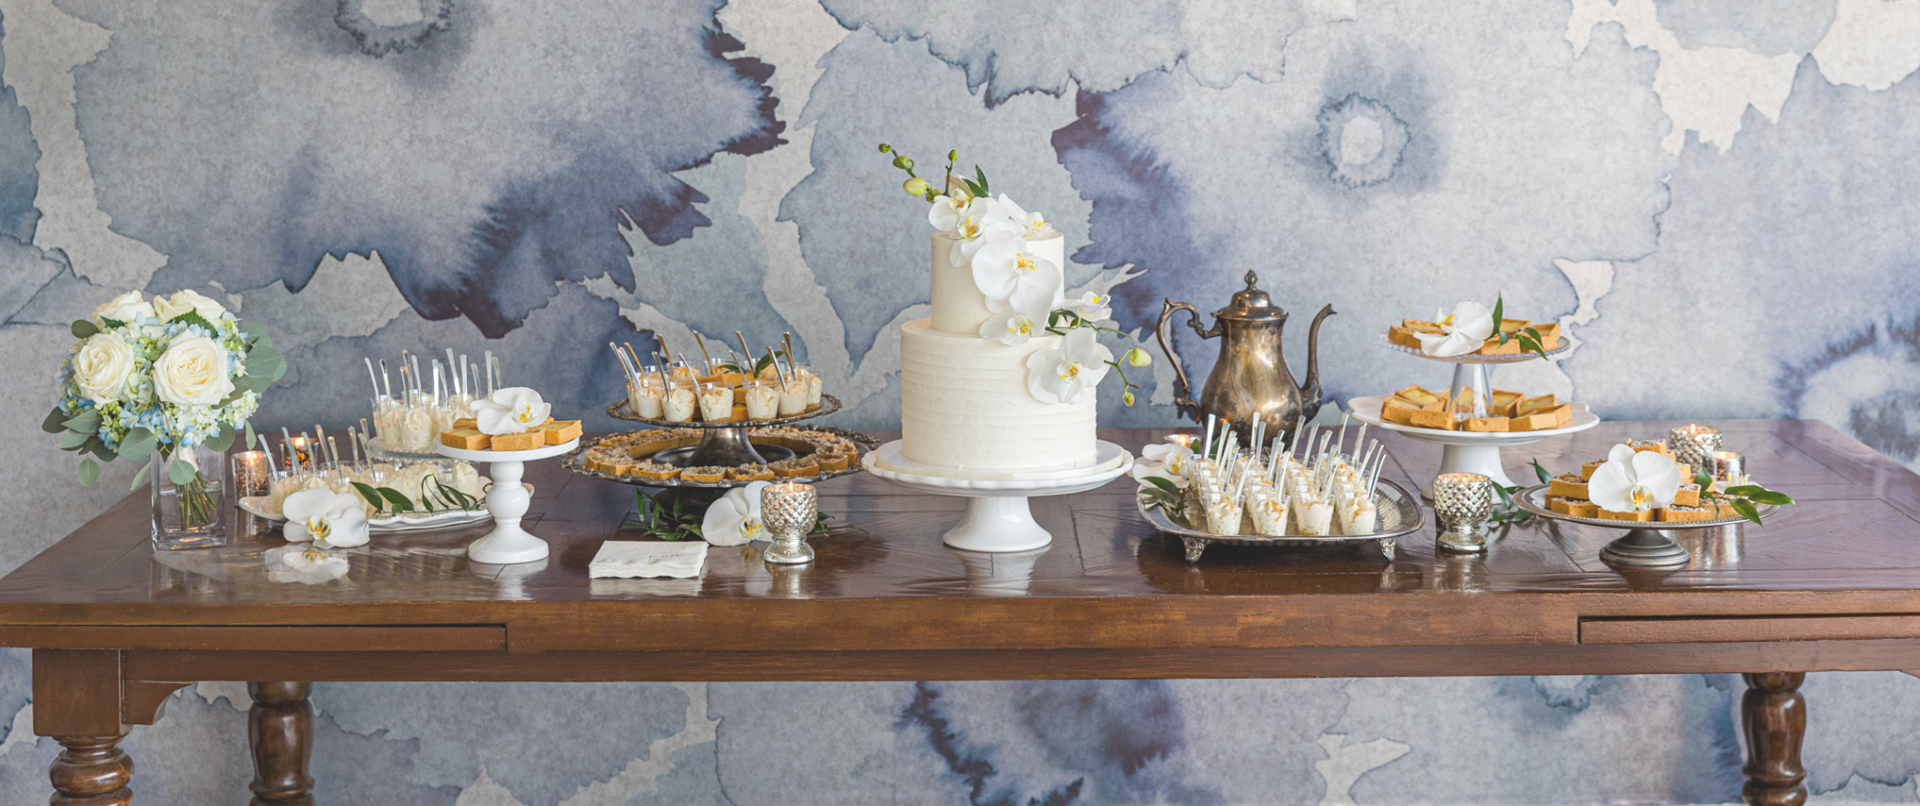 Sweet table with wedding cake captured by Carlsbad Photo at La Valencia Hotel La Jolla